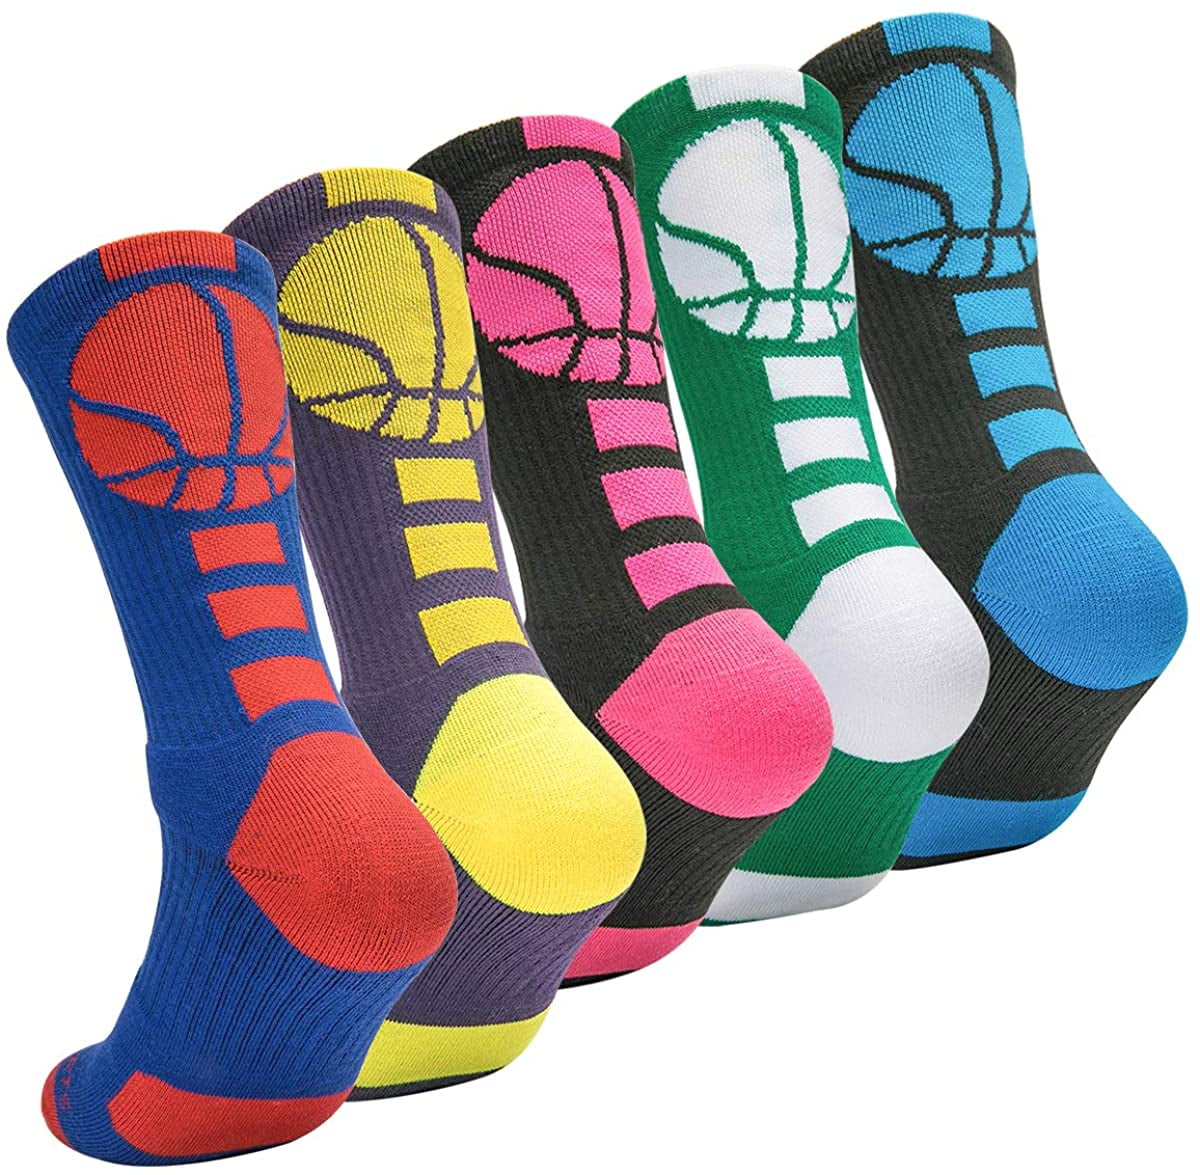 Boys Sock Basketball Soccer Hiking Ski Athletic Outdoor Sports Thick Calf High Crew Socks 6 Pack 